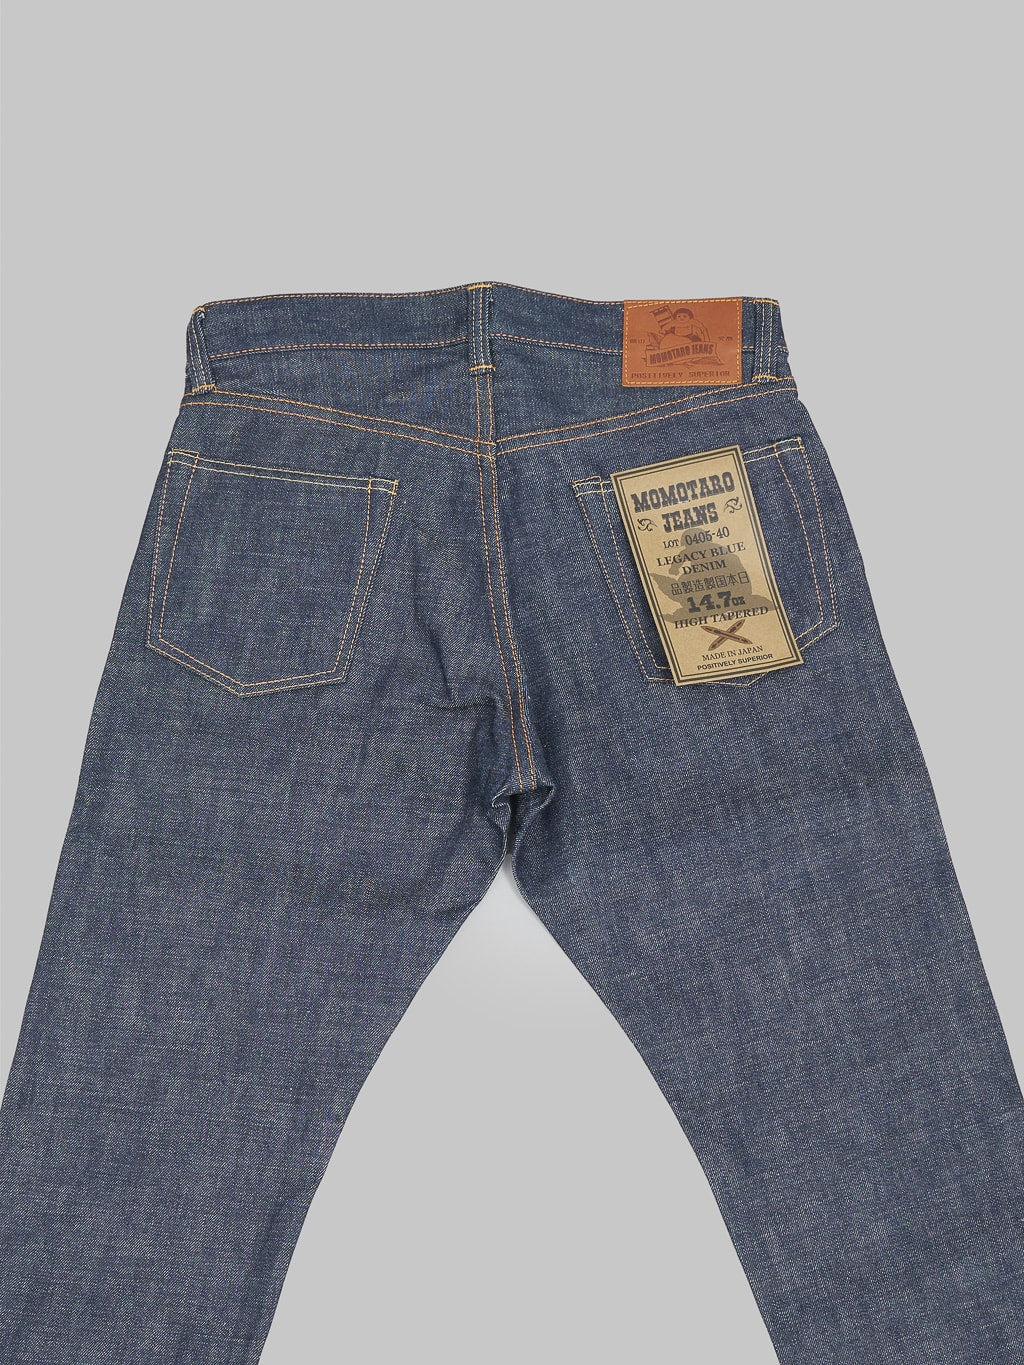 Momotaro legacy blue high tapered jeans back pocket stitching 